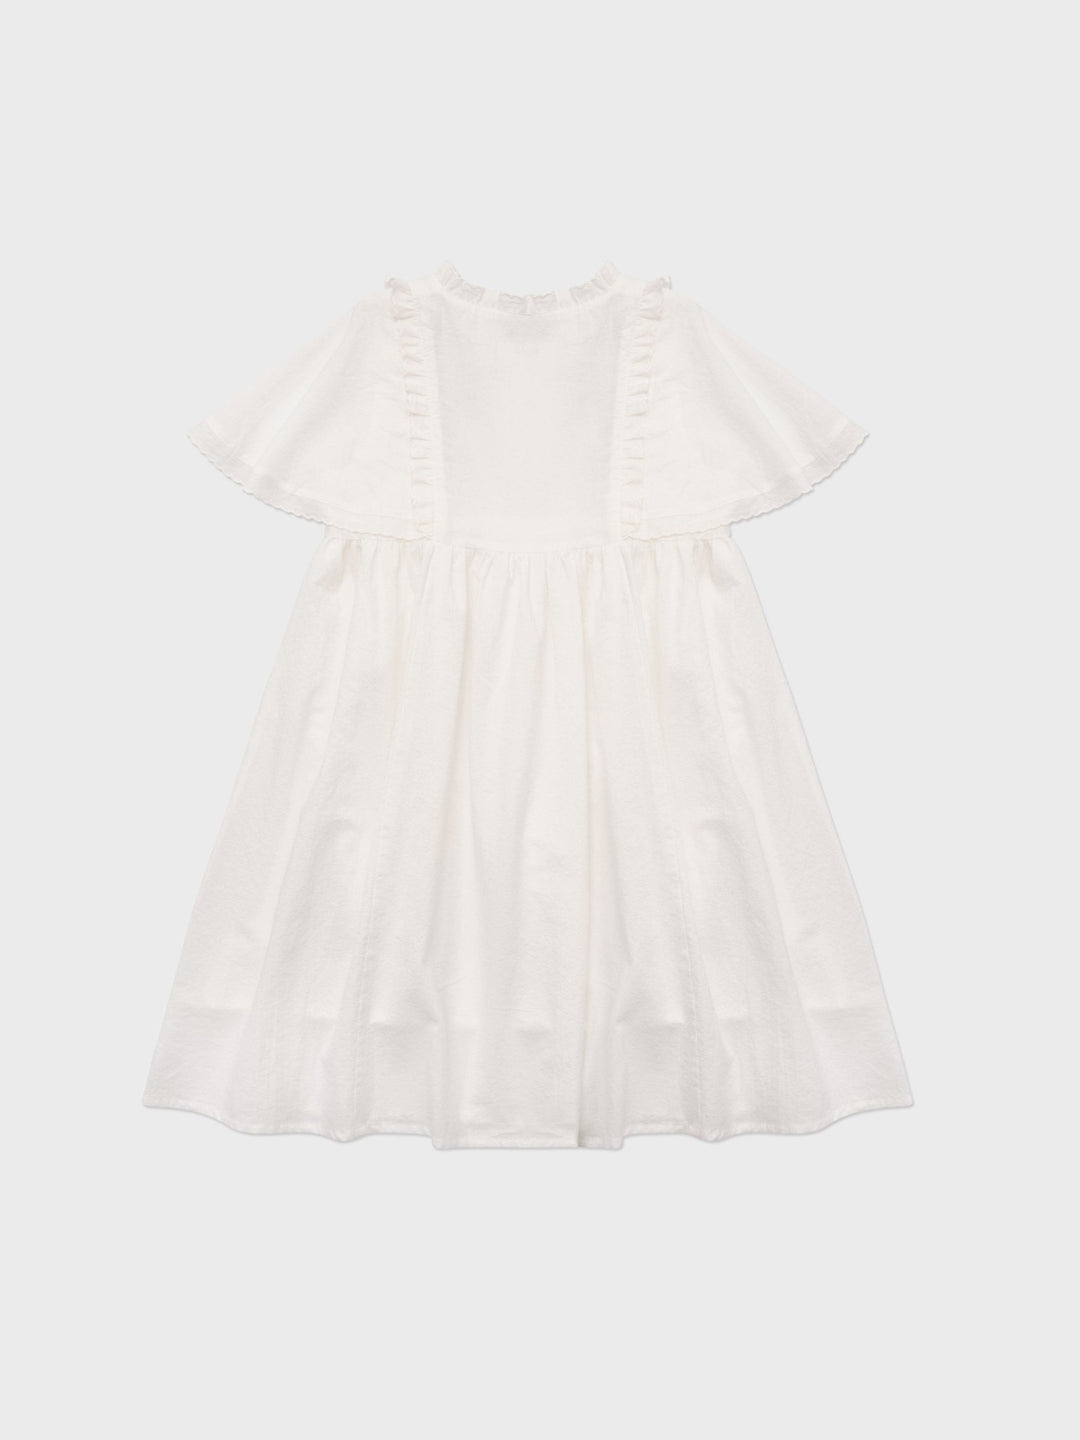 Flossie Dress - White - Posh New York